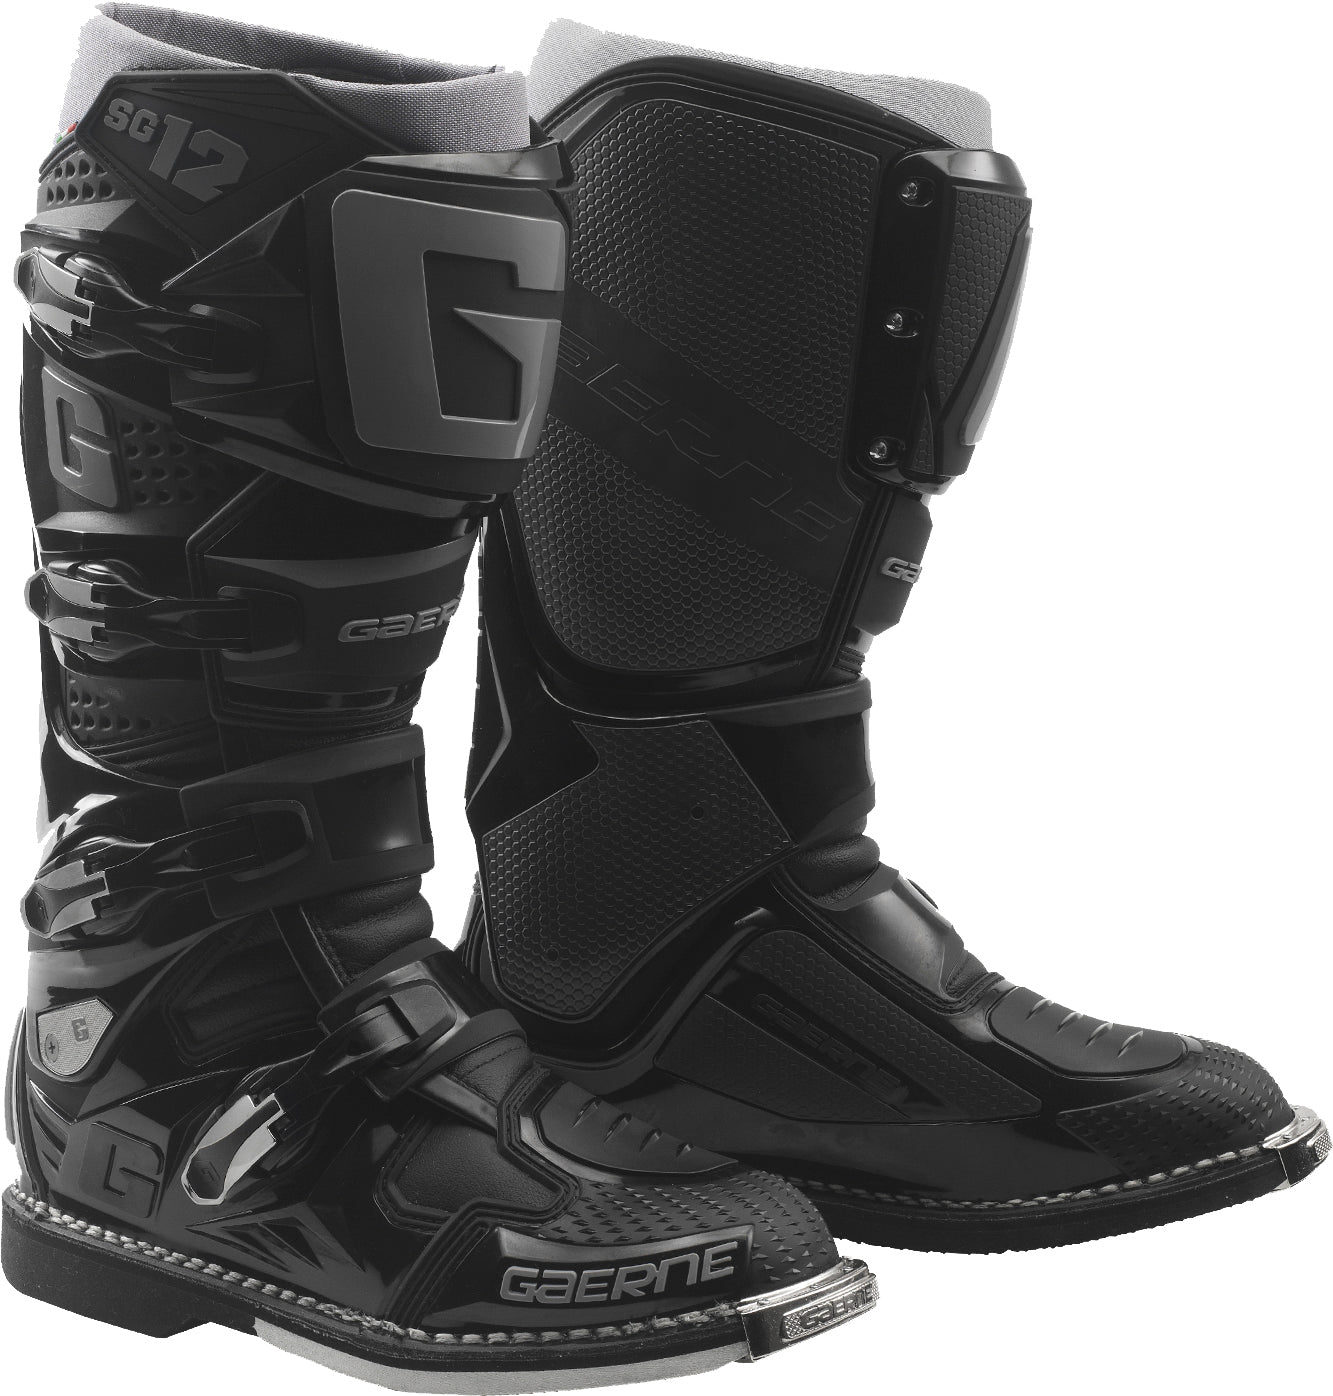 Sg 12 Boots Black Sz 11